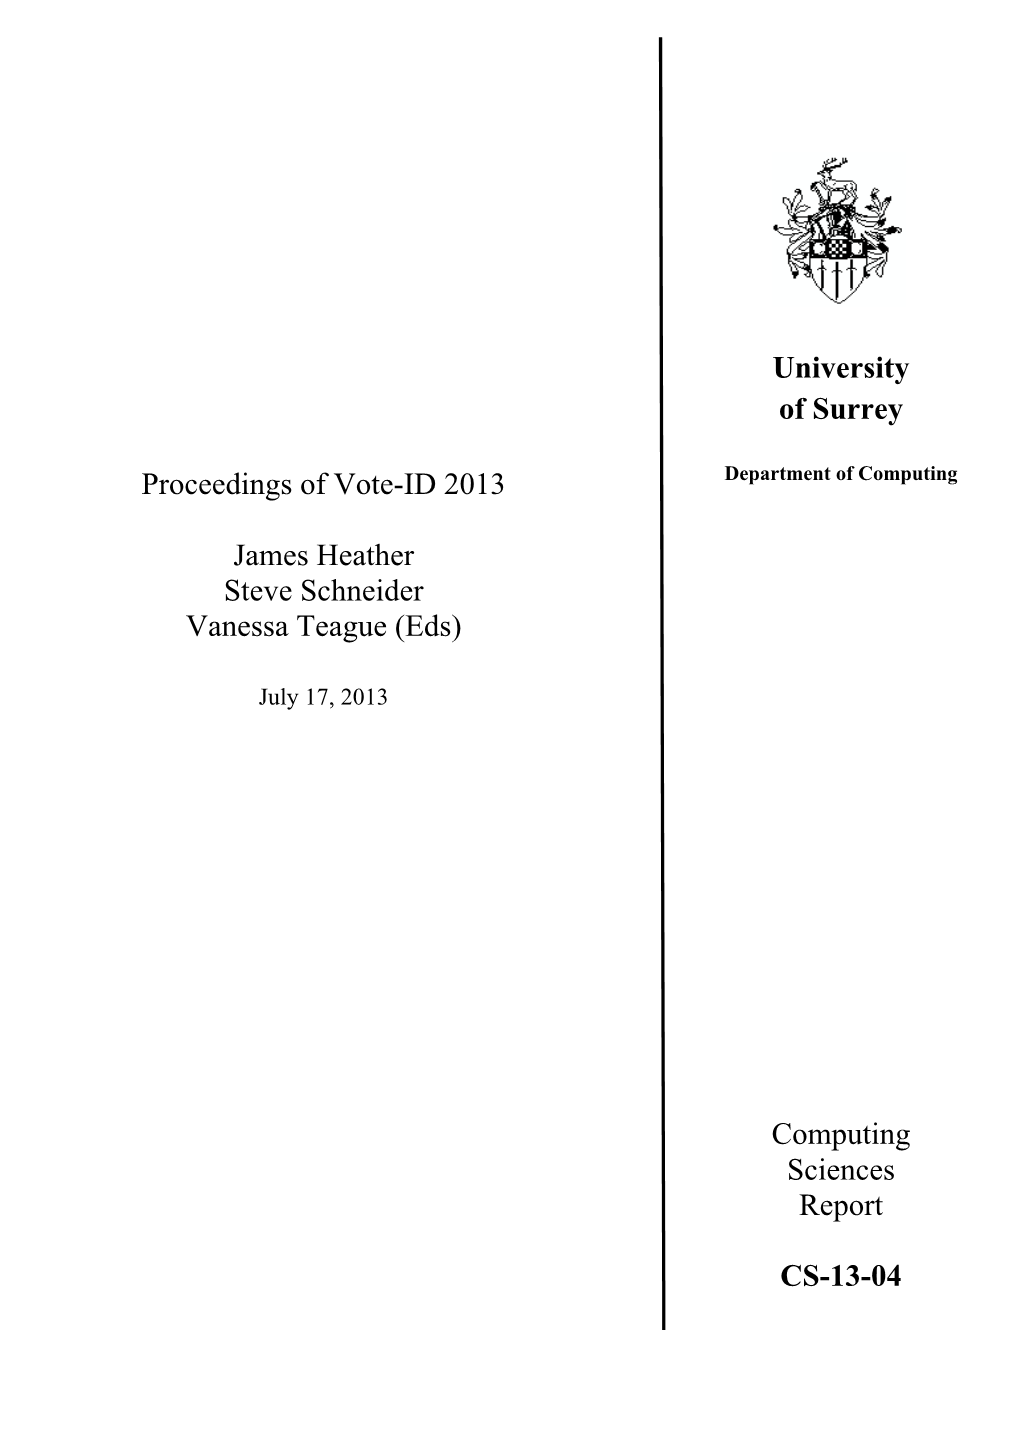 University of Surrey Computing Sciences Report CS-13-04